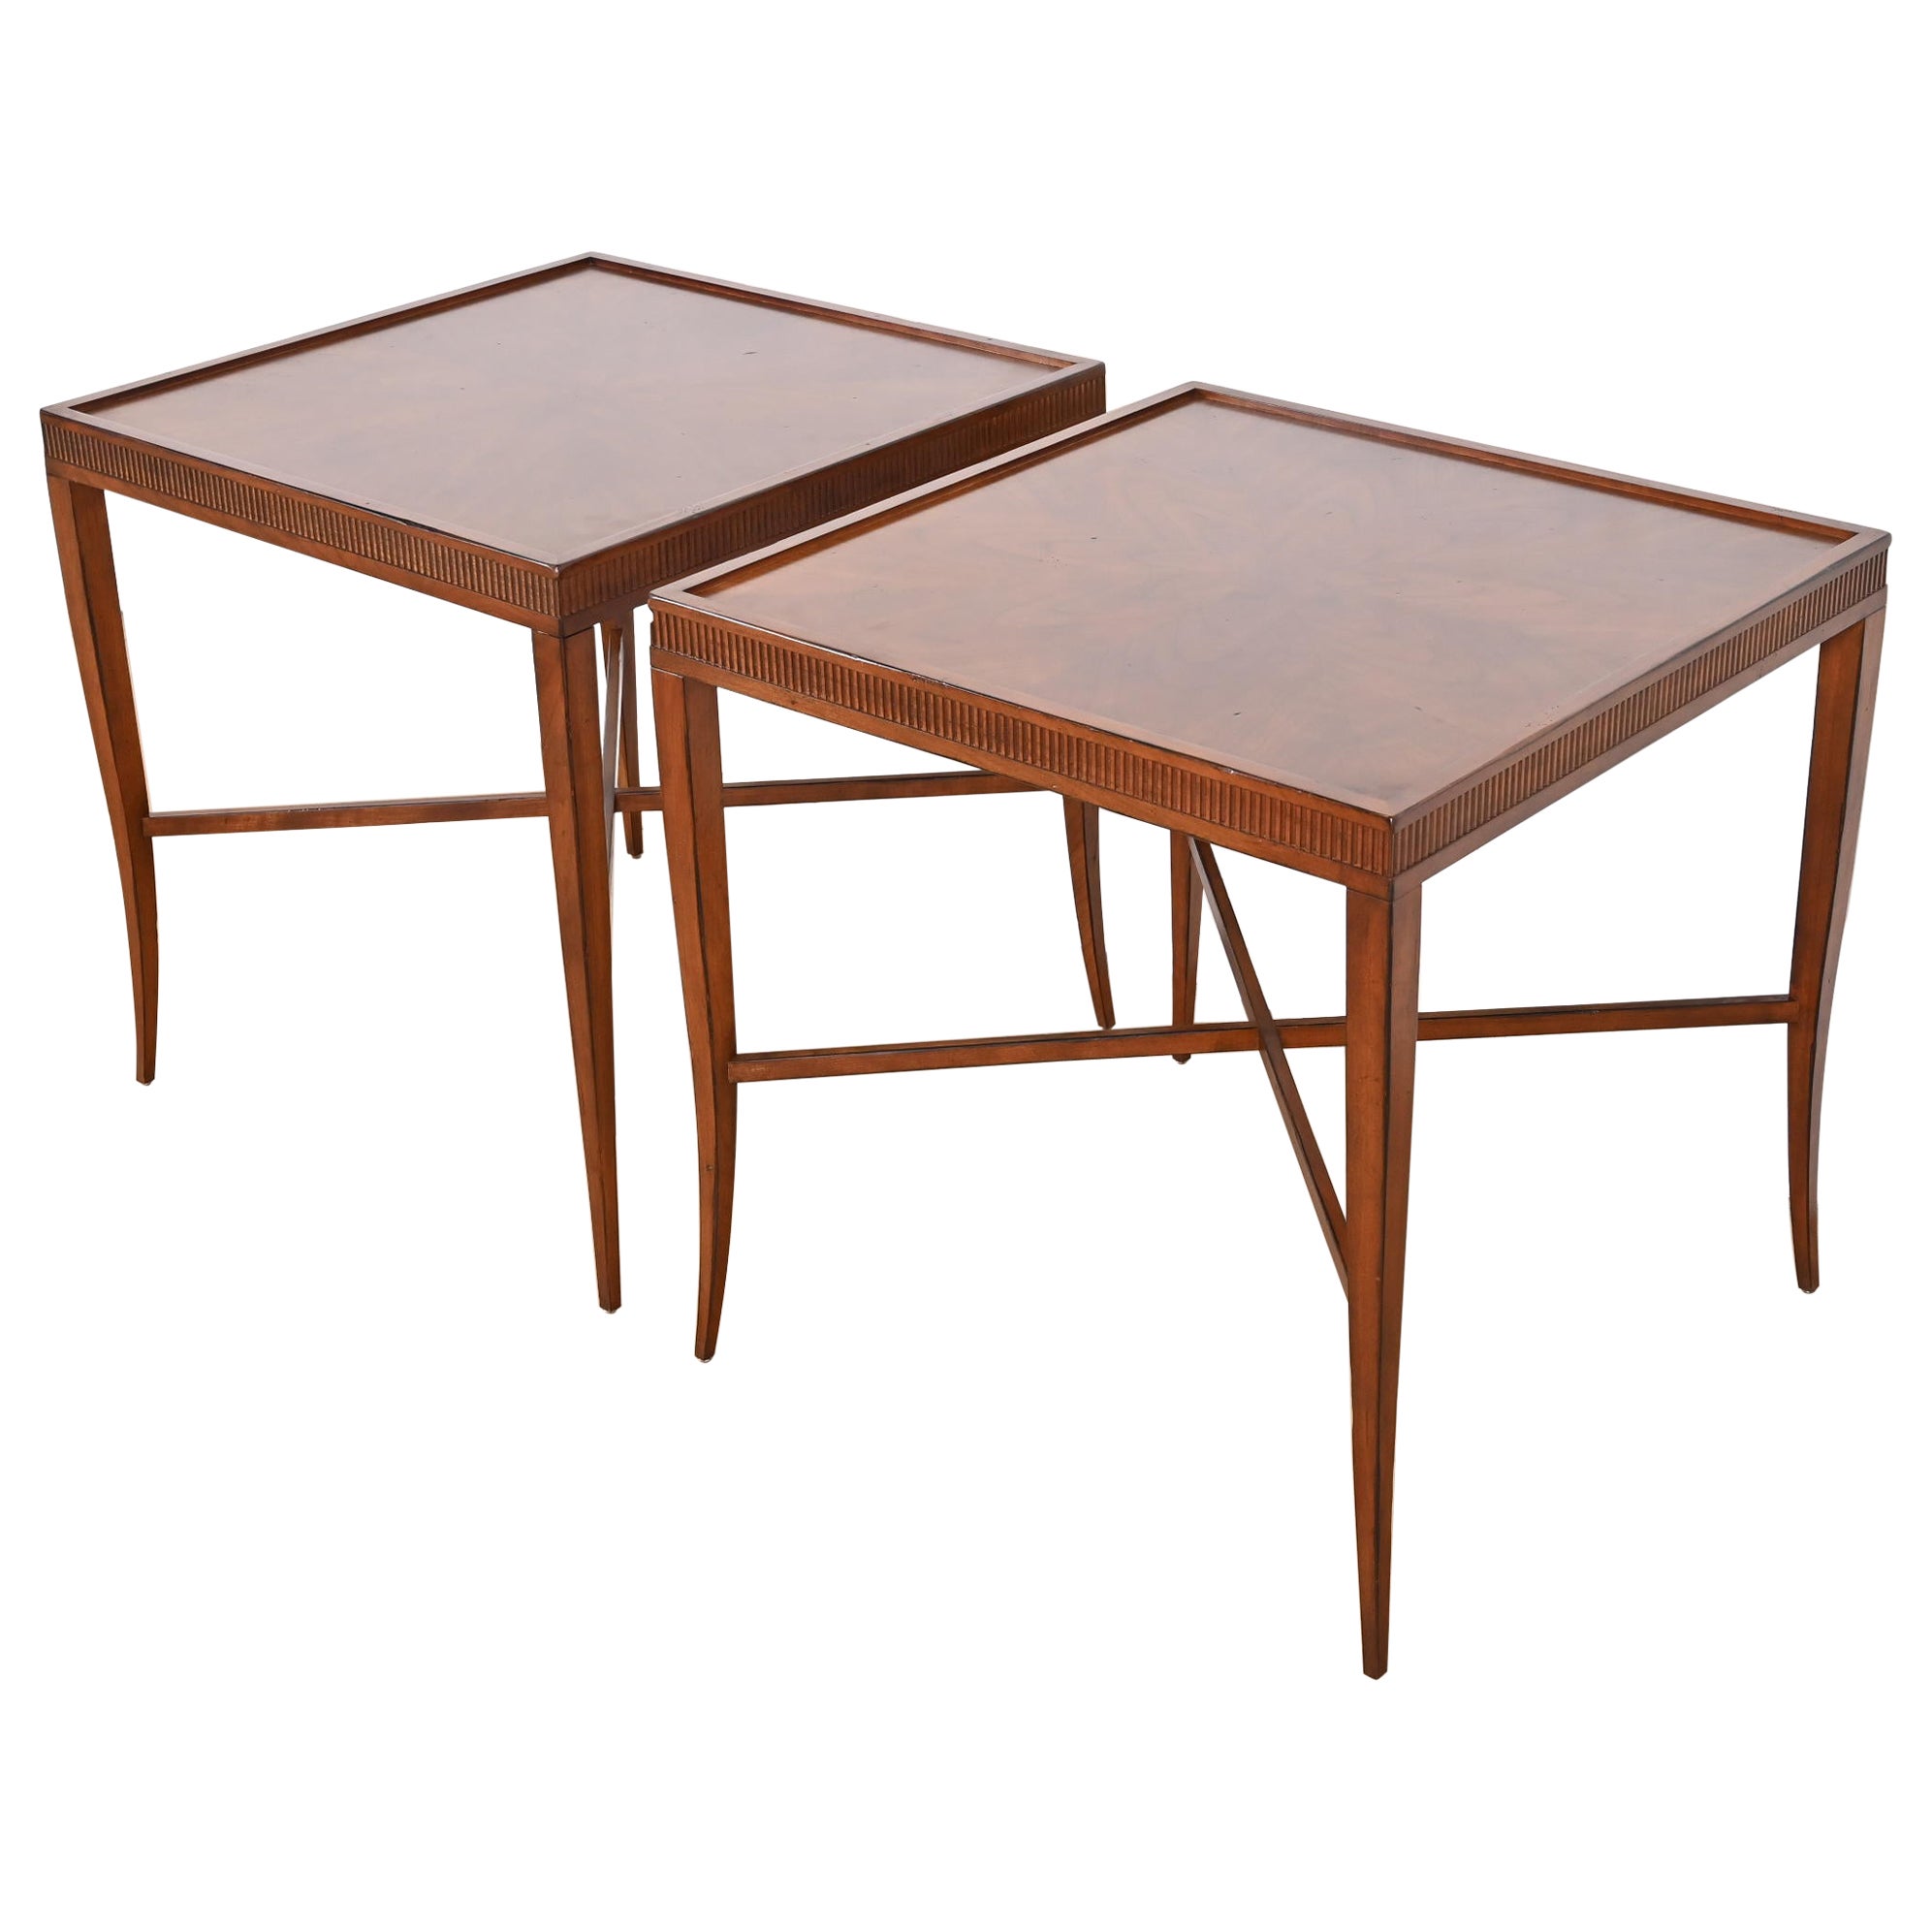 Harden Furniture Regency Inlaid Starburst Parquetry Cherry Wood Side Tables